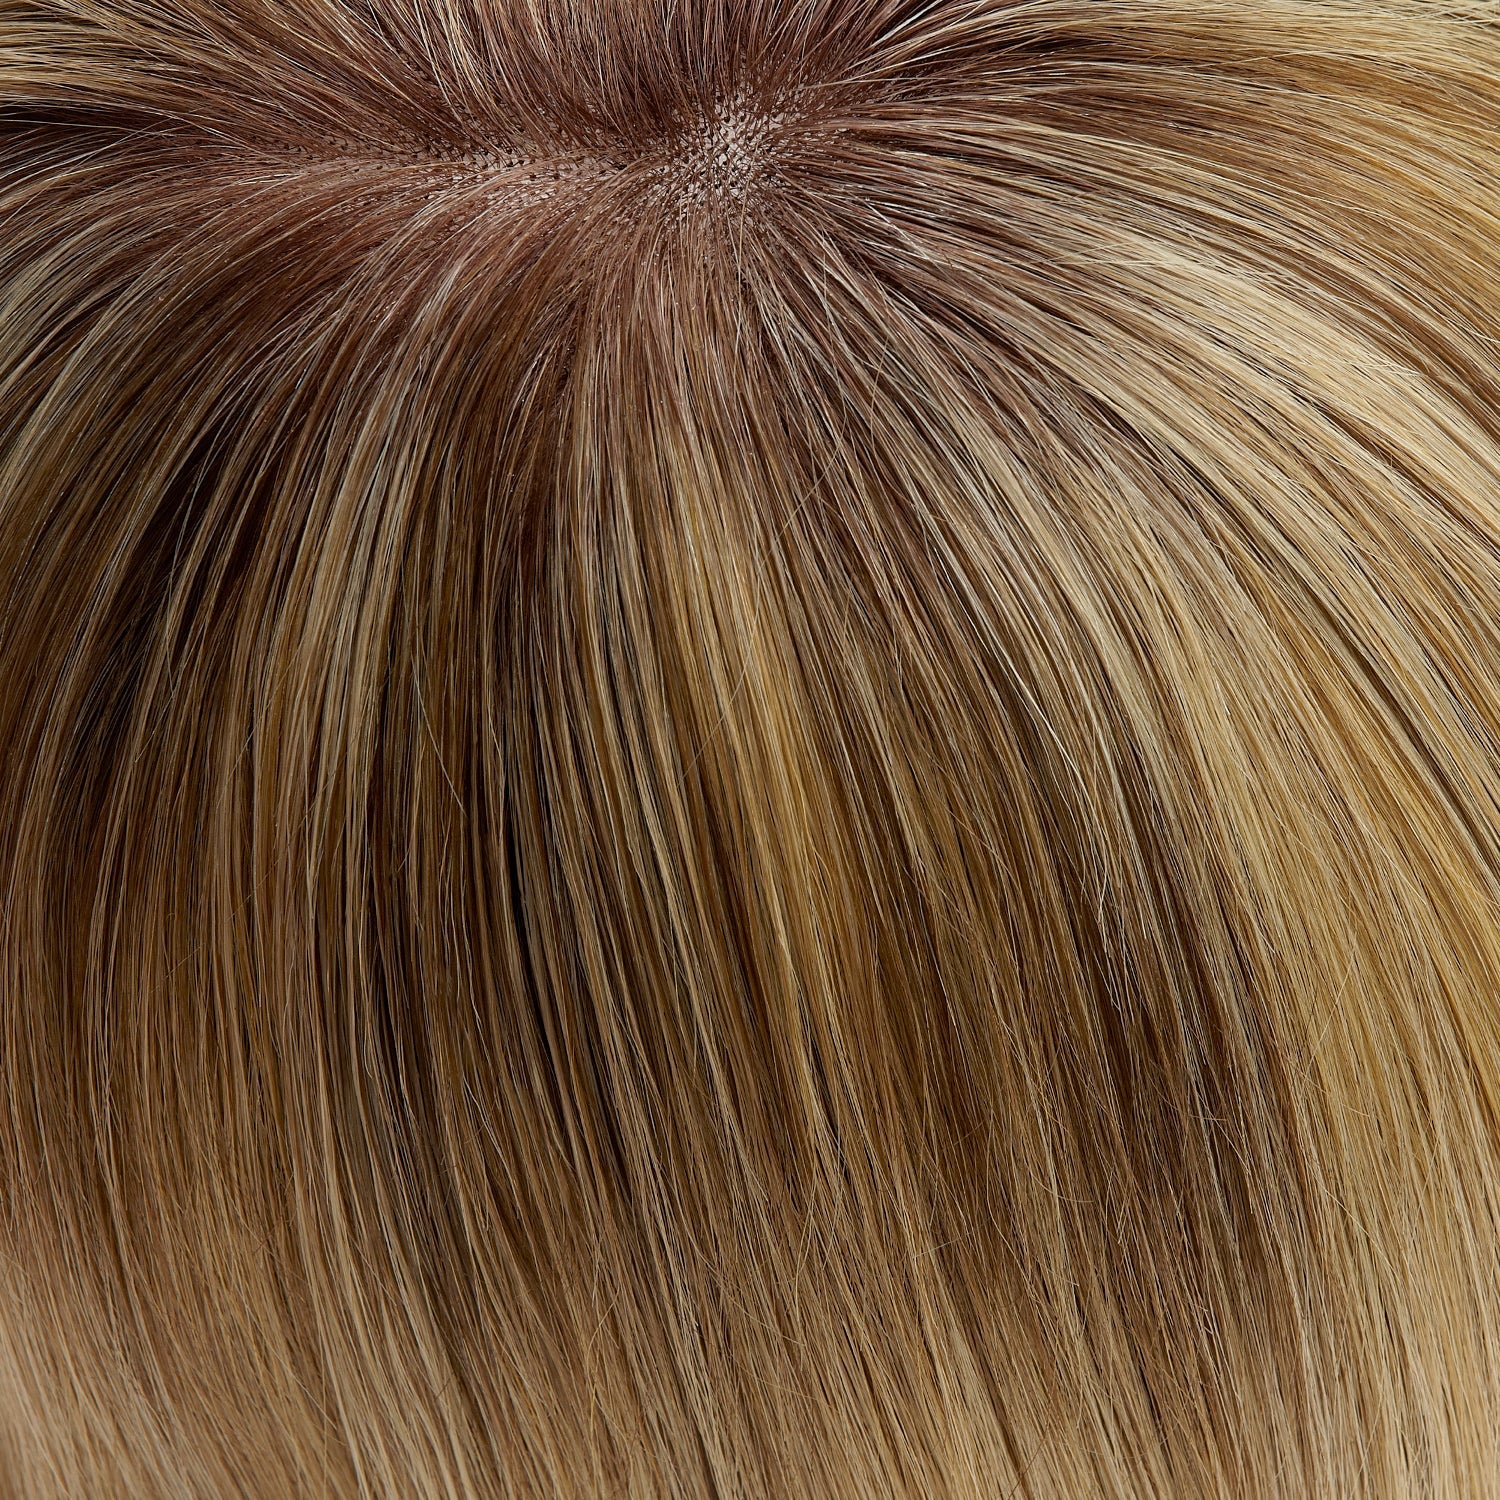 Colbie wig - Jon Renau Reimagined Human Hair Collection *NEW*